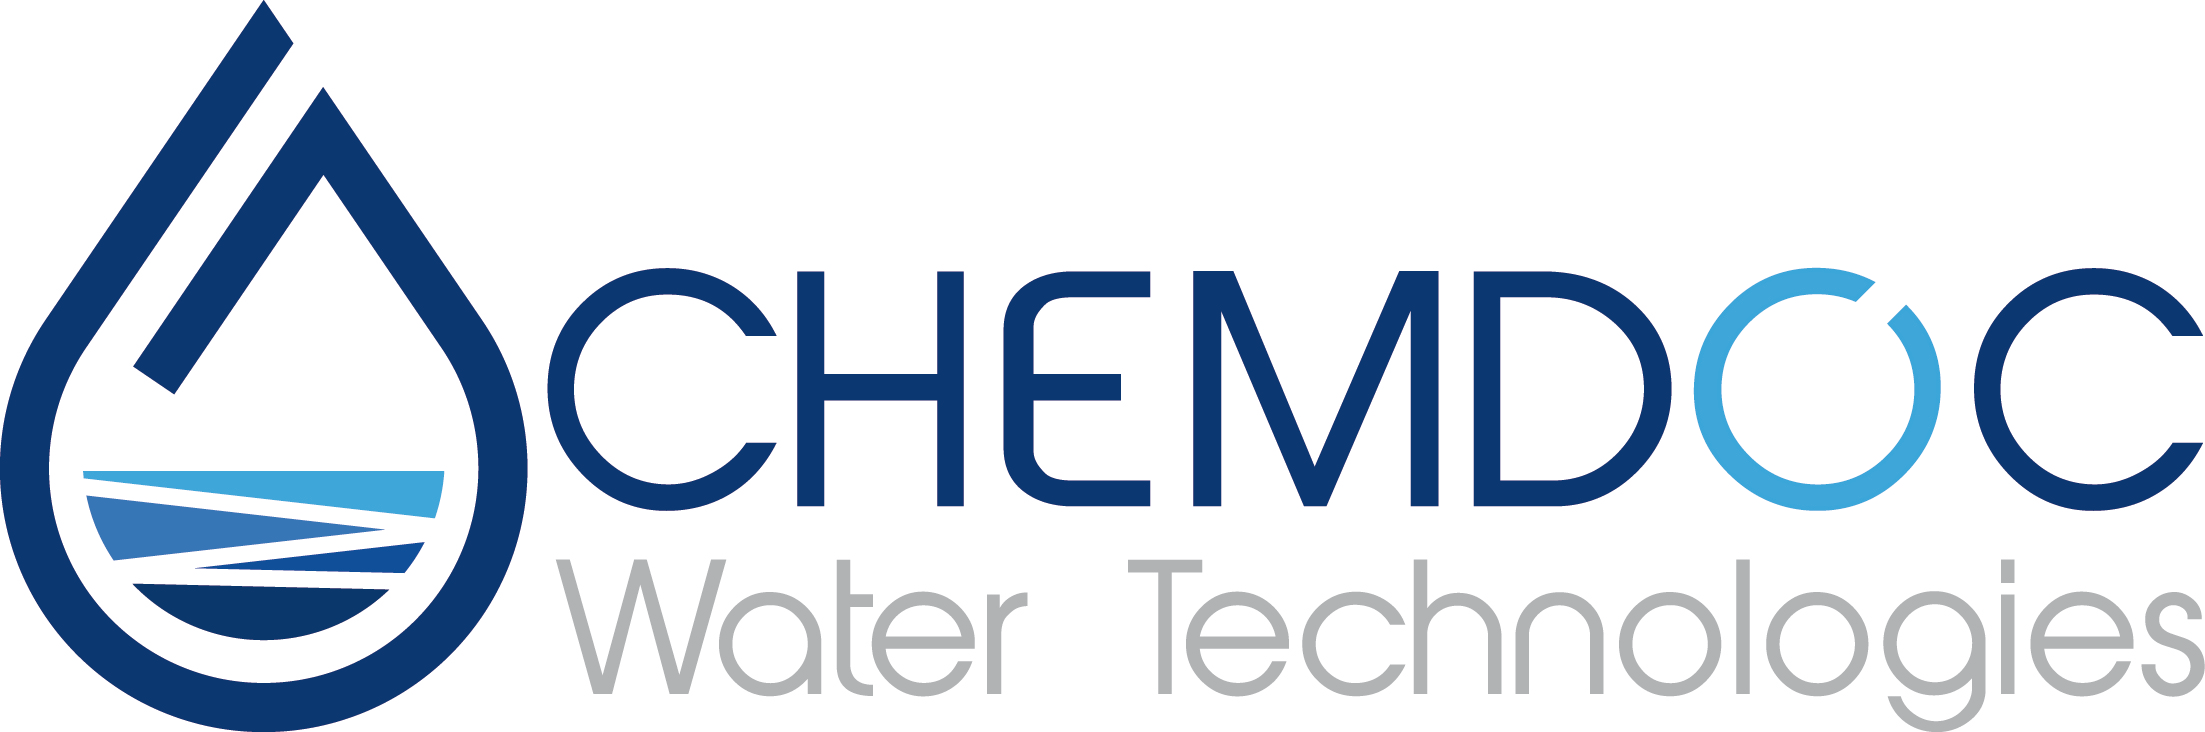 chemdoc-water-technologies-logo